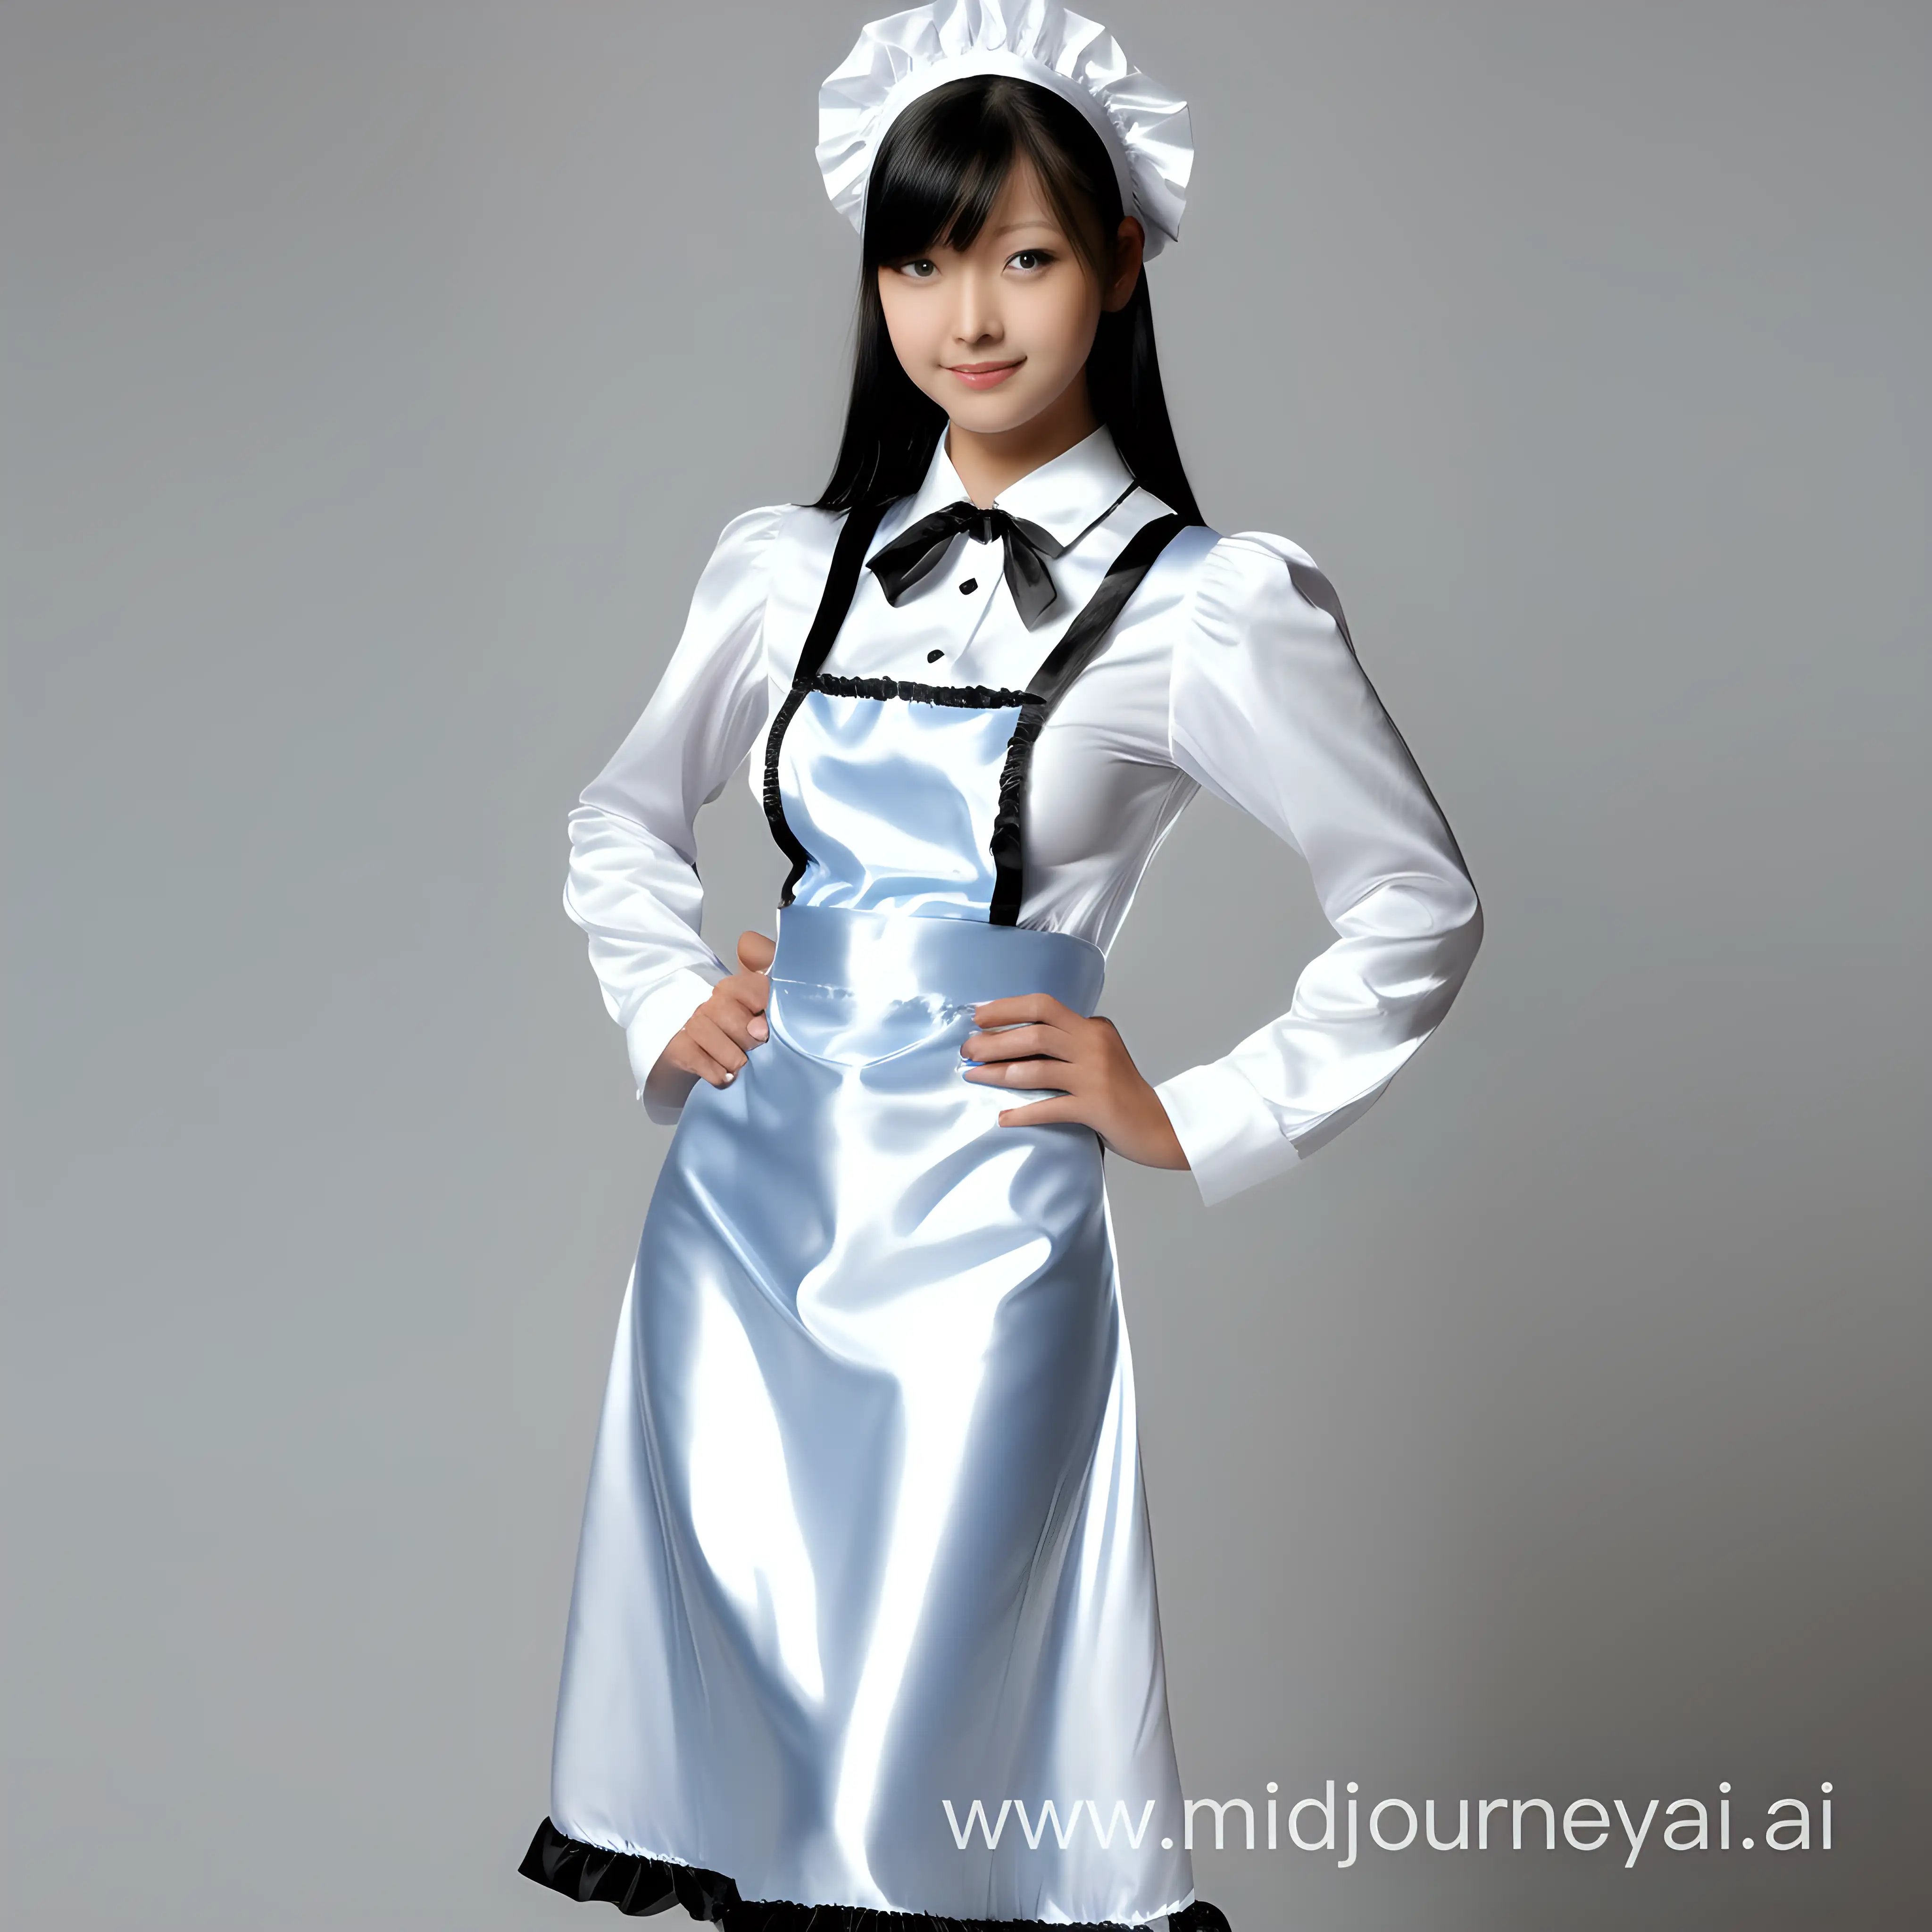 Elegant Maid in Satin Uniform Captivating Household Beauty